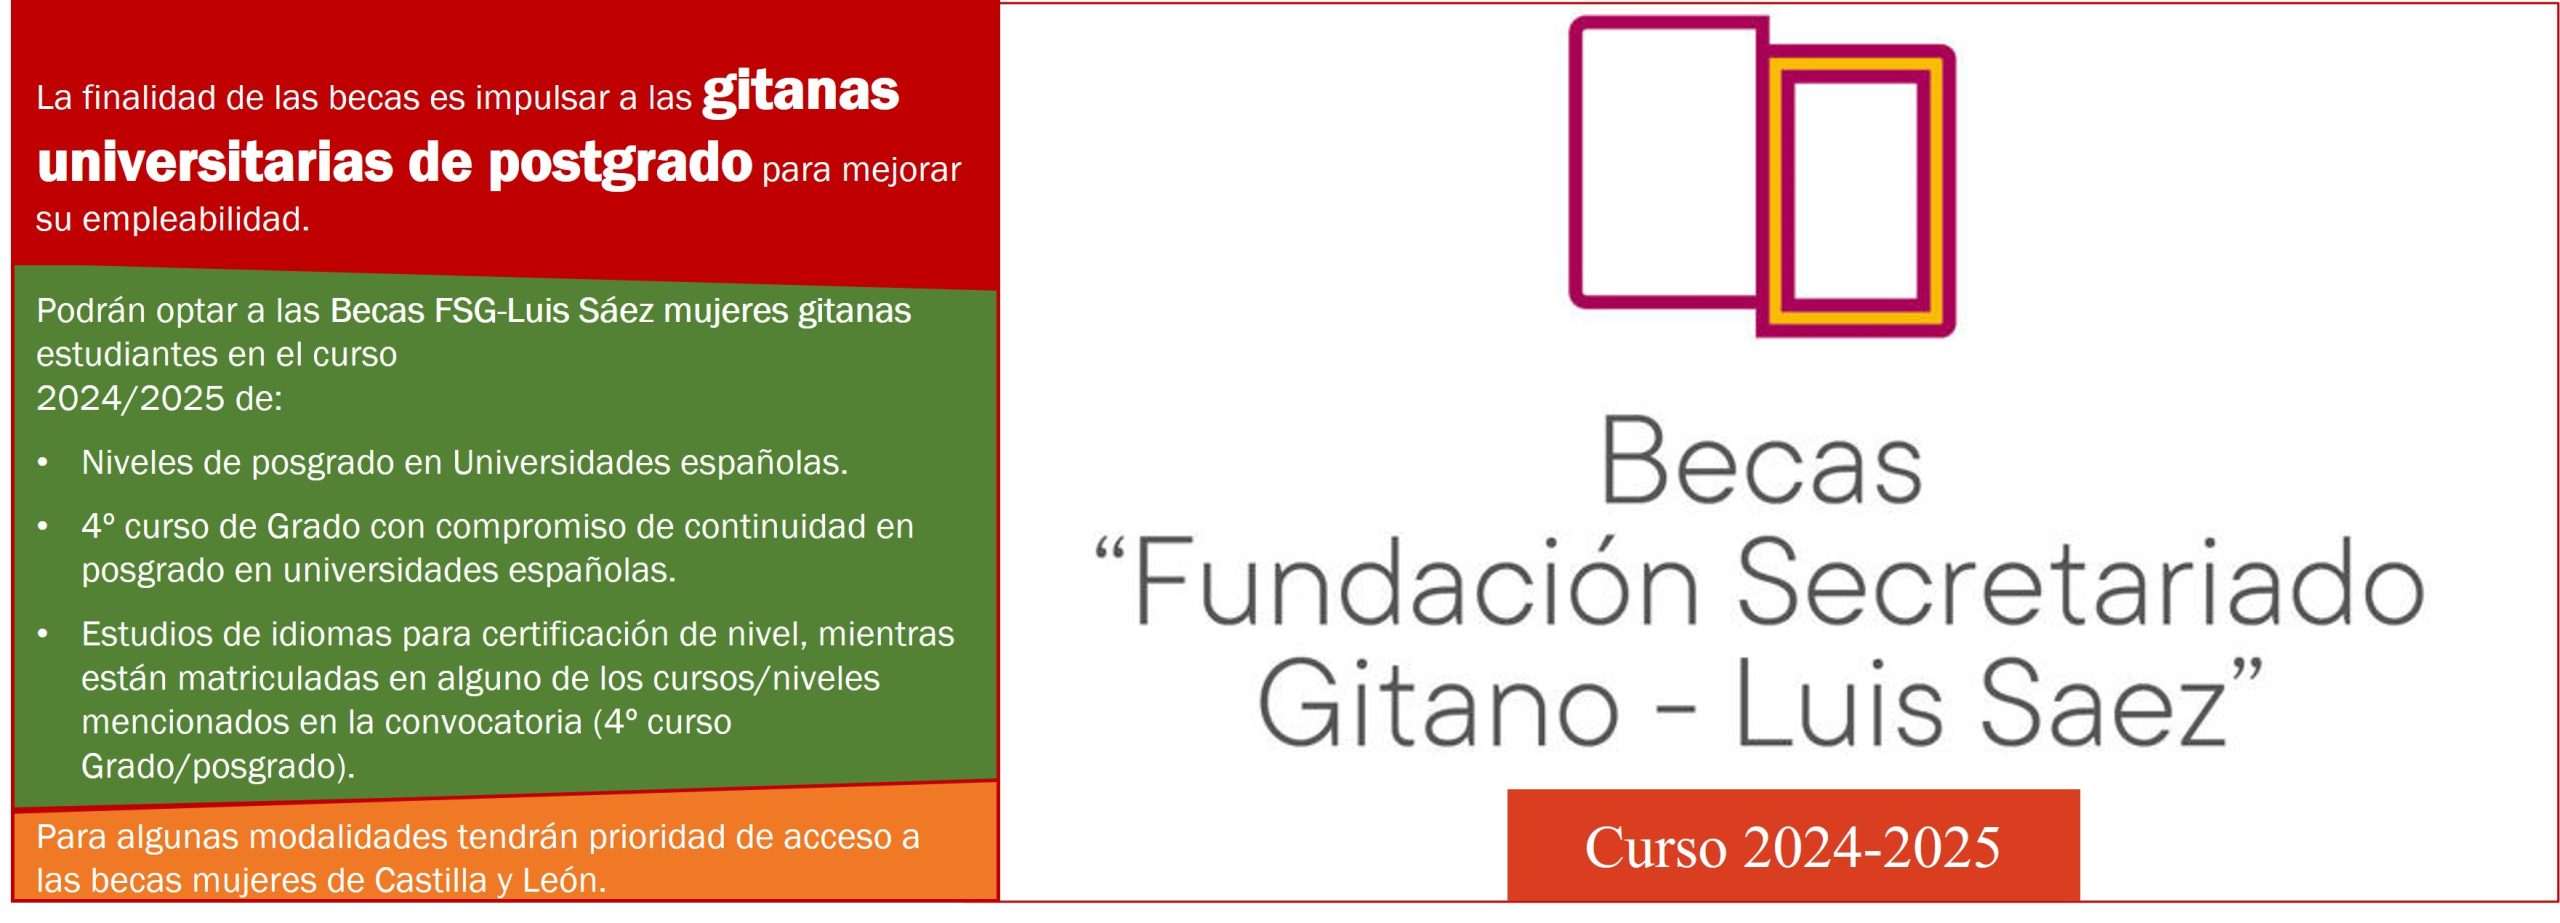 Becas Fundación Secretariado Gitano “Luis Sáez” para mujeres gitanas universitarias. Convocatoria 2024-2025